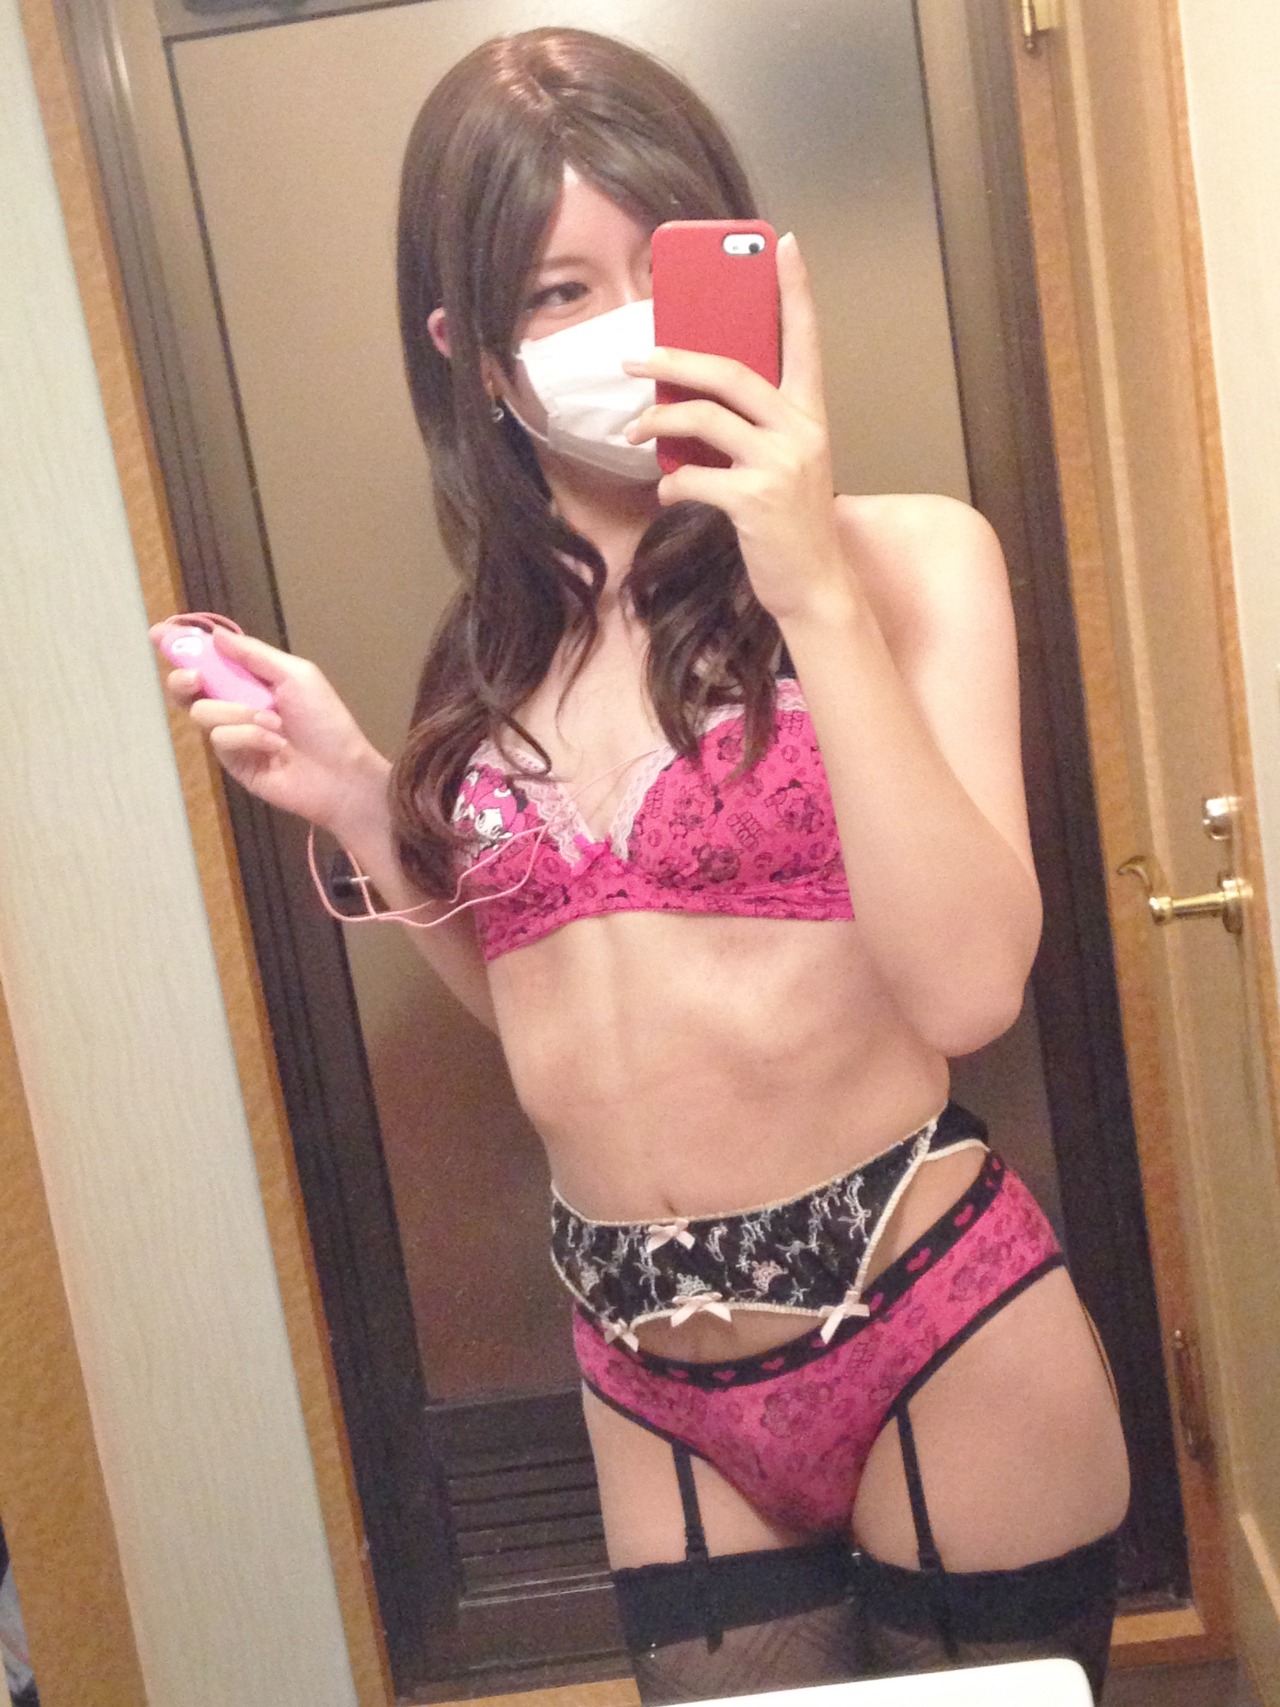 xmikucd:I love pink panties and bras♡♡ Sissy should wear pink lingerie♡♡